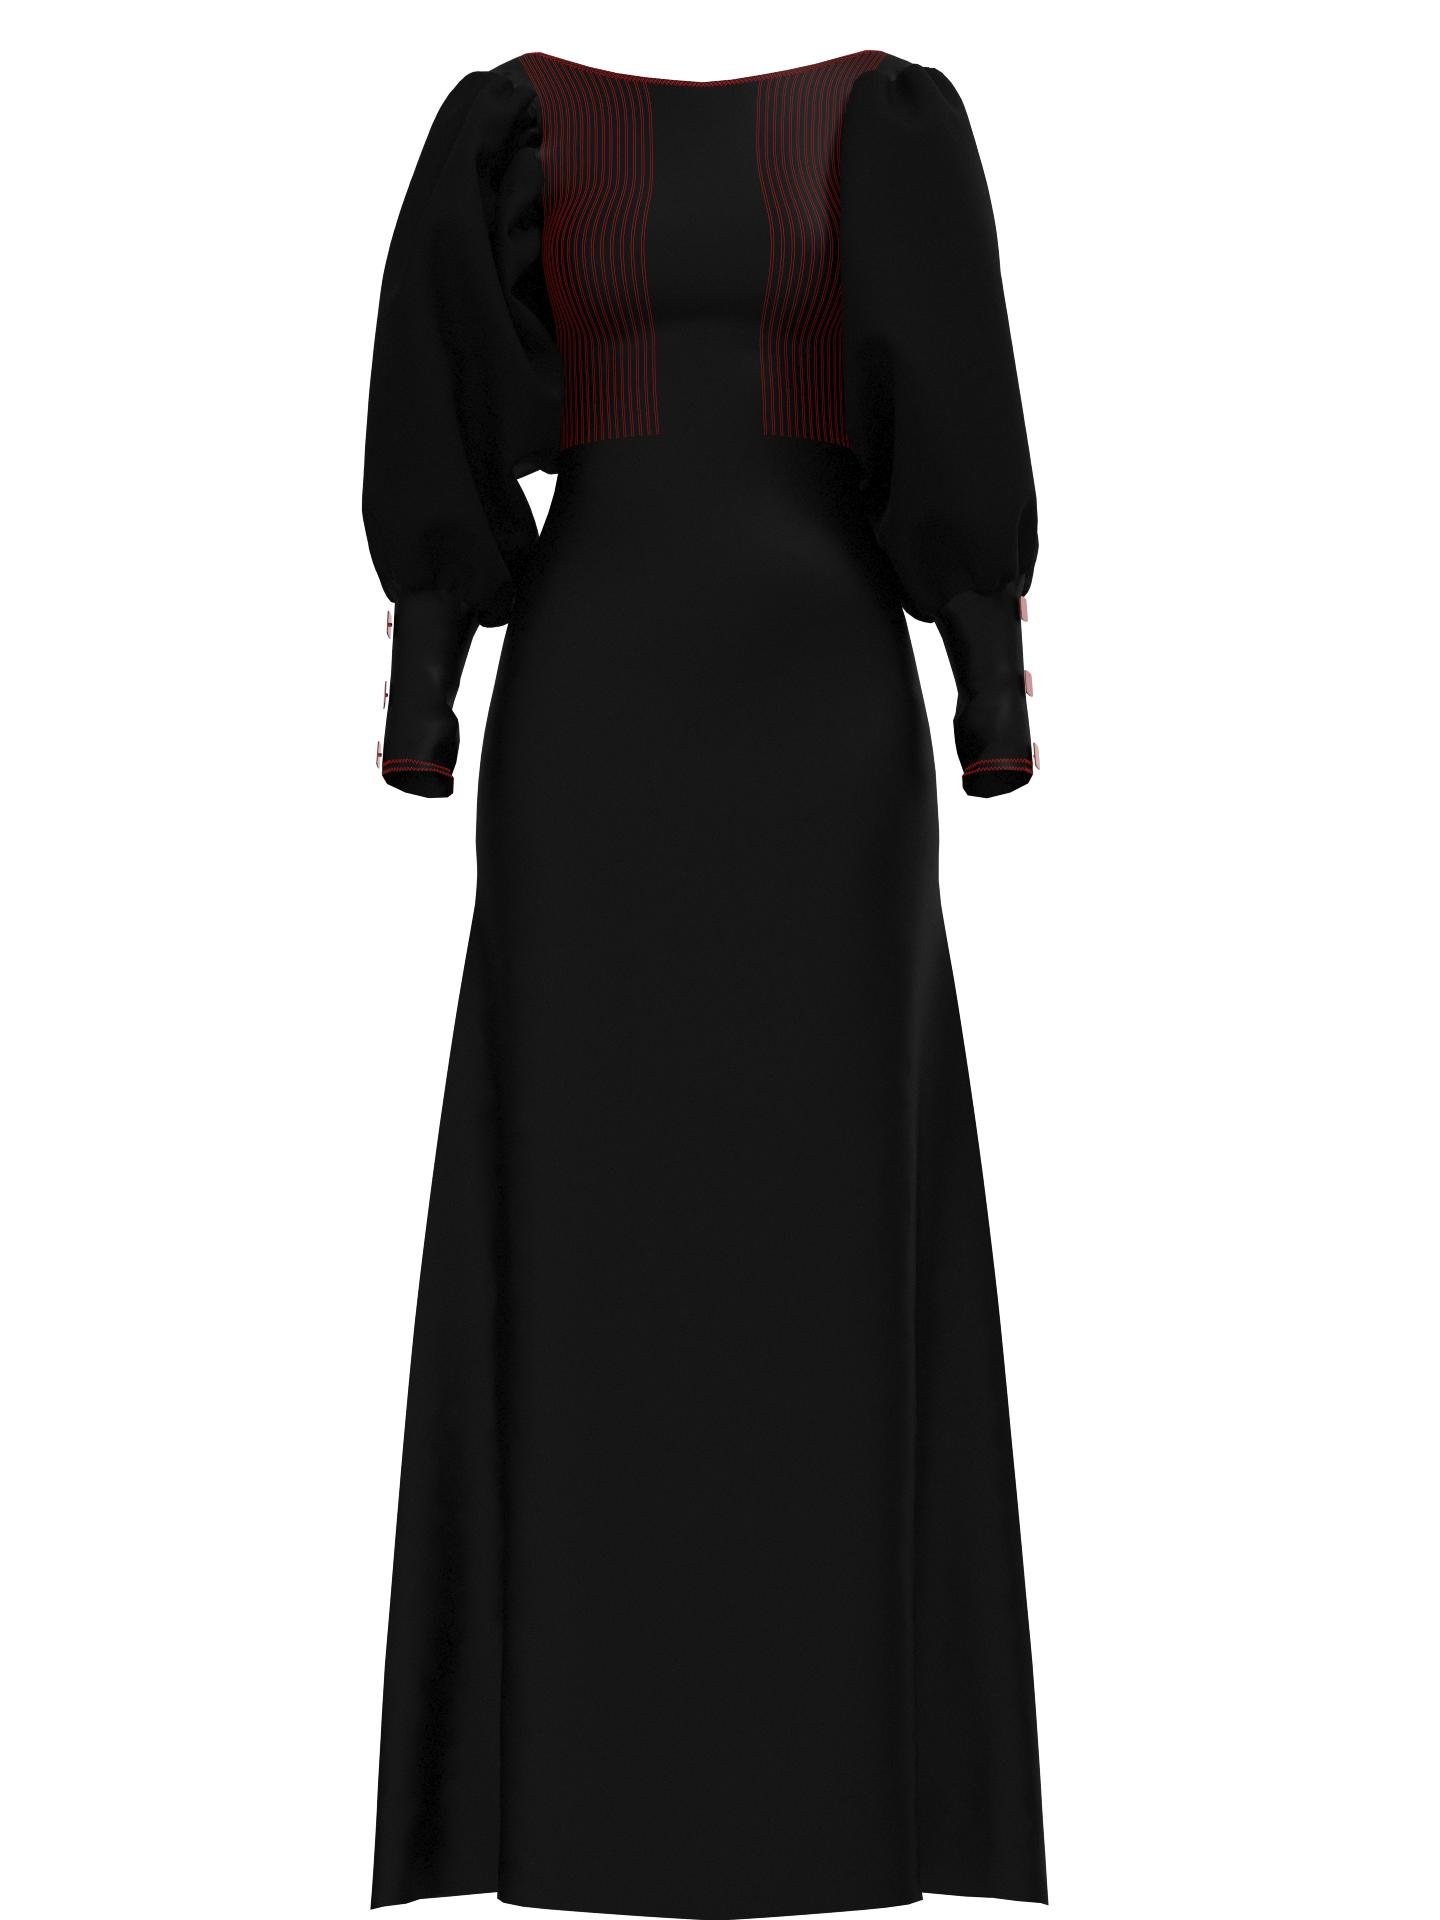 Ebony Elegance Gown by NEOMODEST